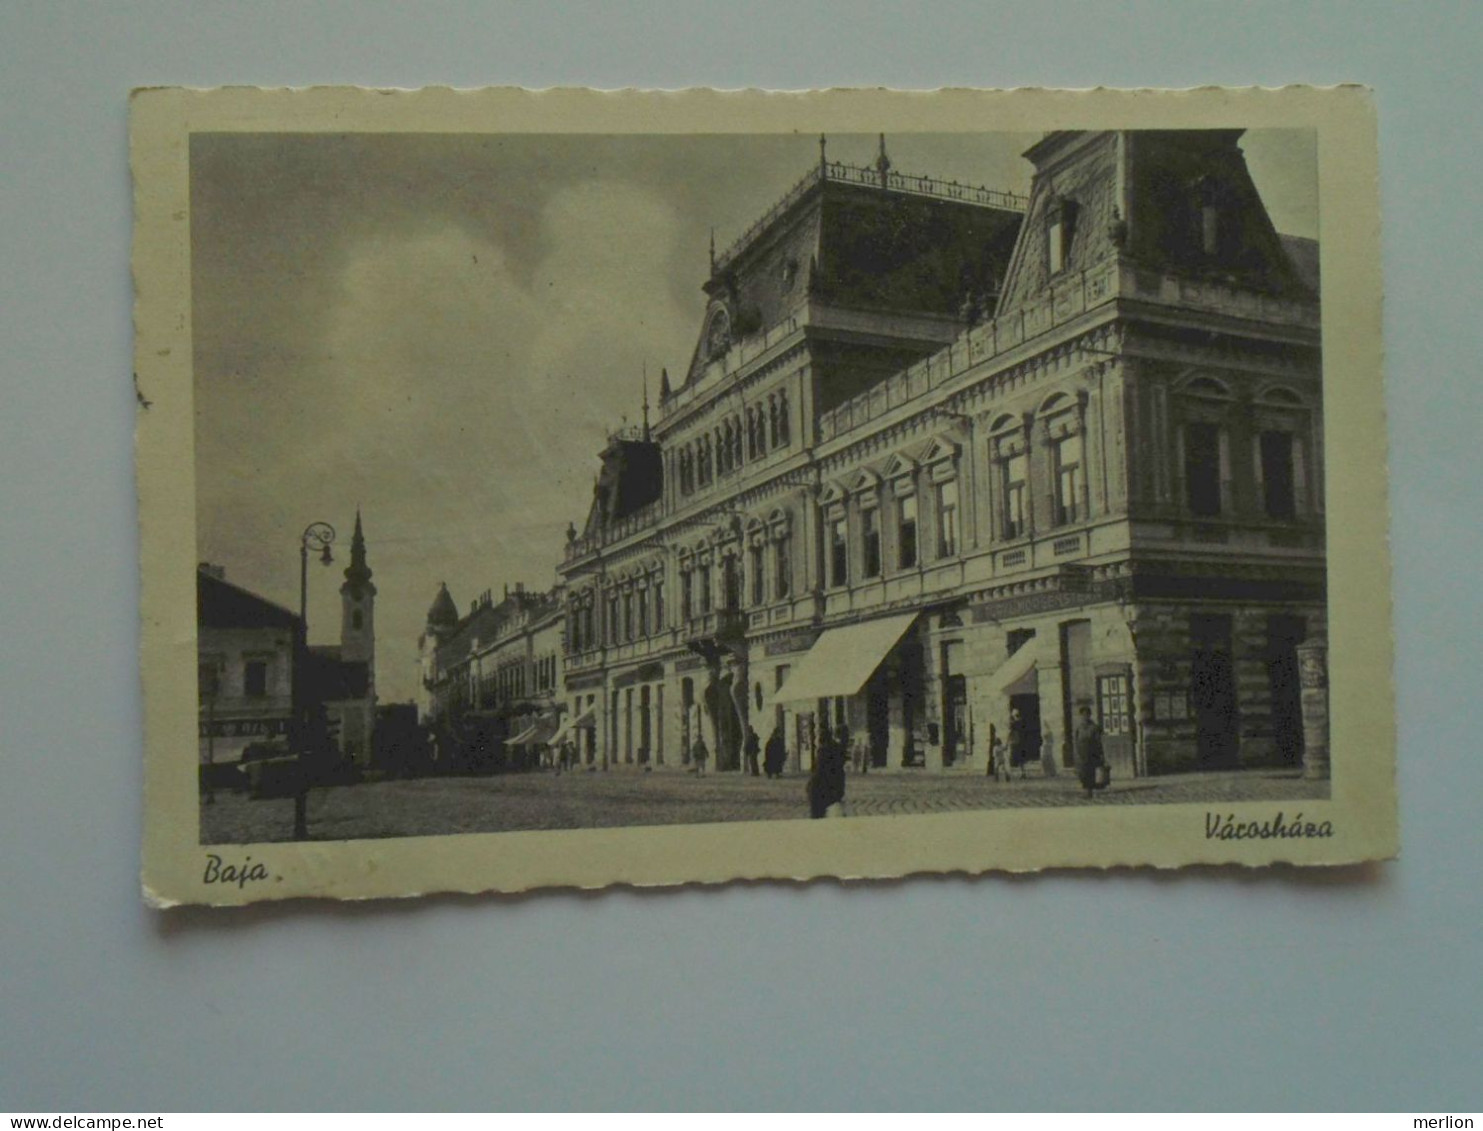 D200846  Hungary  Postage Due -  1942    Porto Stamp  4 Filler   BAJA - Port Dû (Taxe)